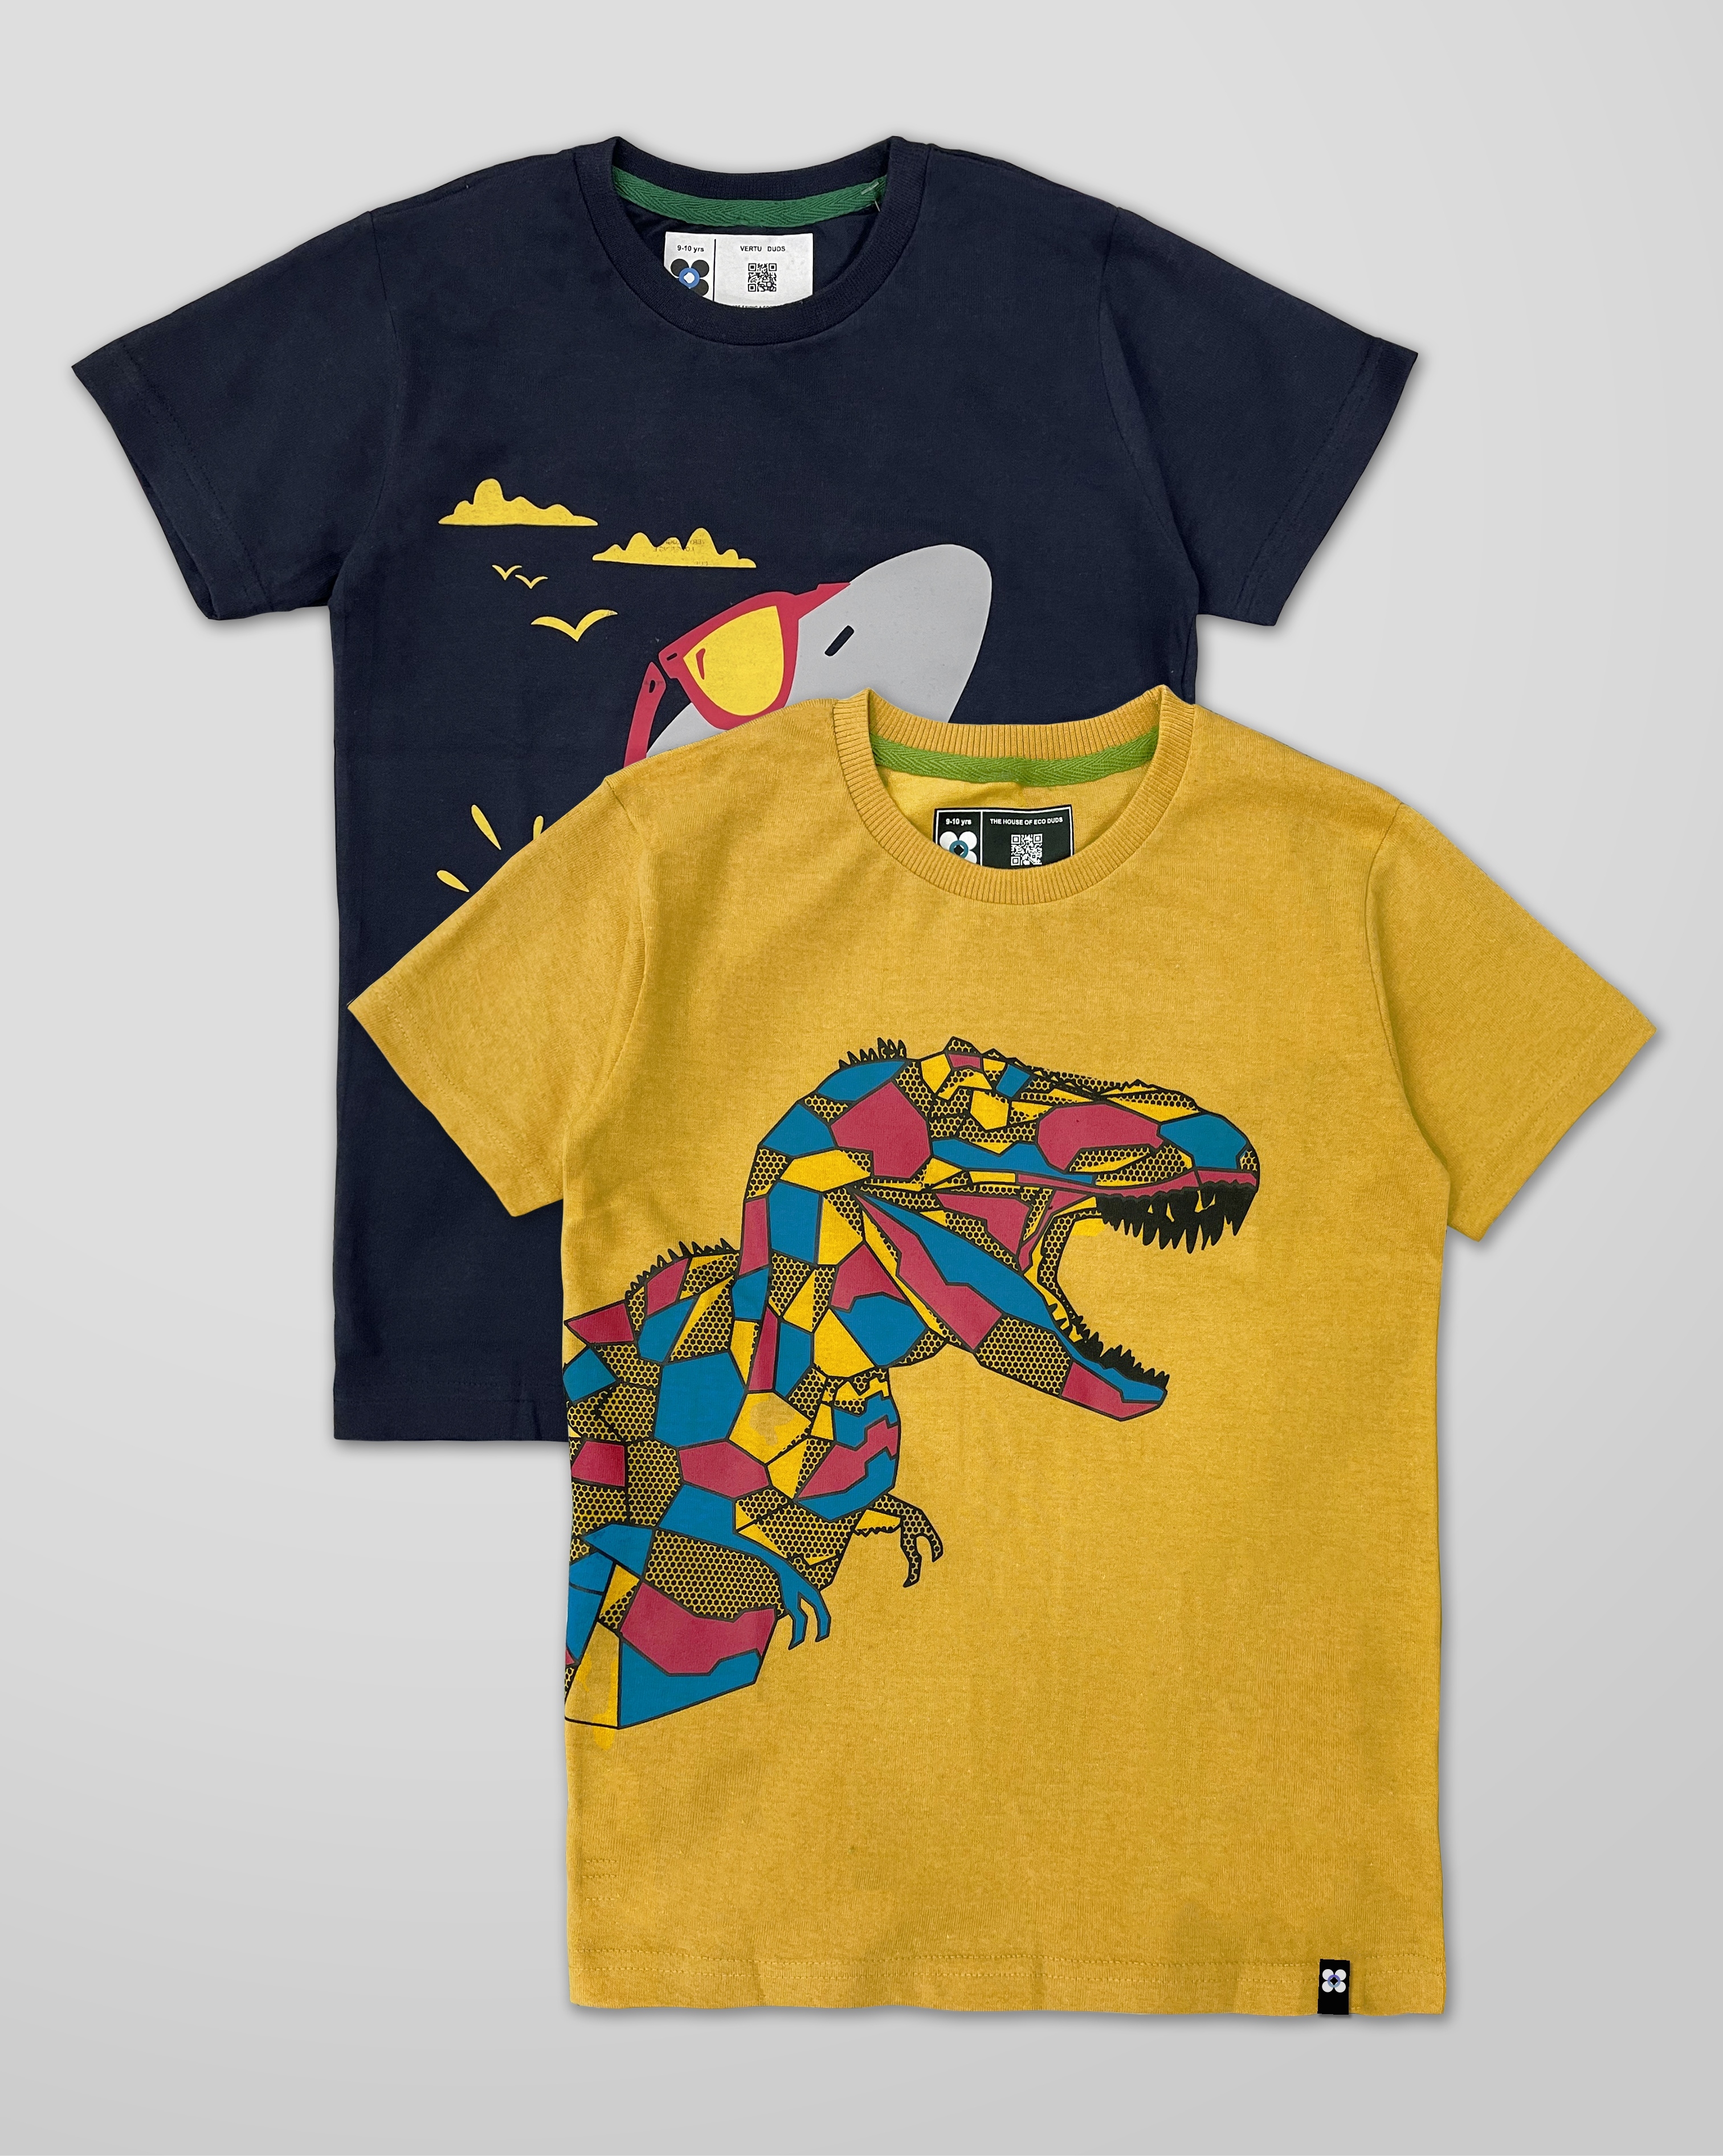 Vertu Duds | Vertu Duds Printed Unisex Kids Round Neck Multi-coloured T-Shirt 0